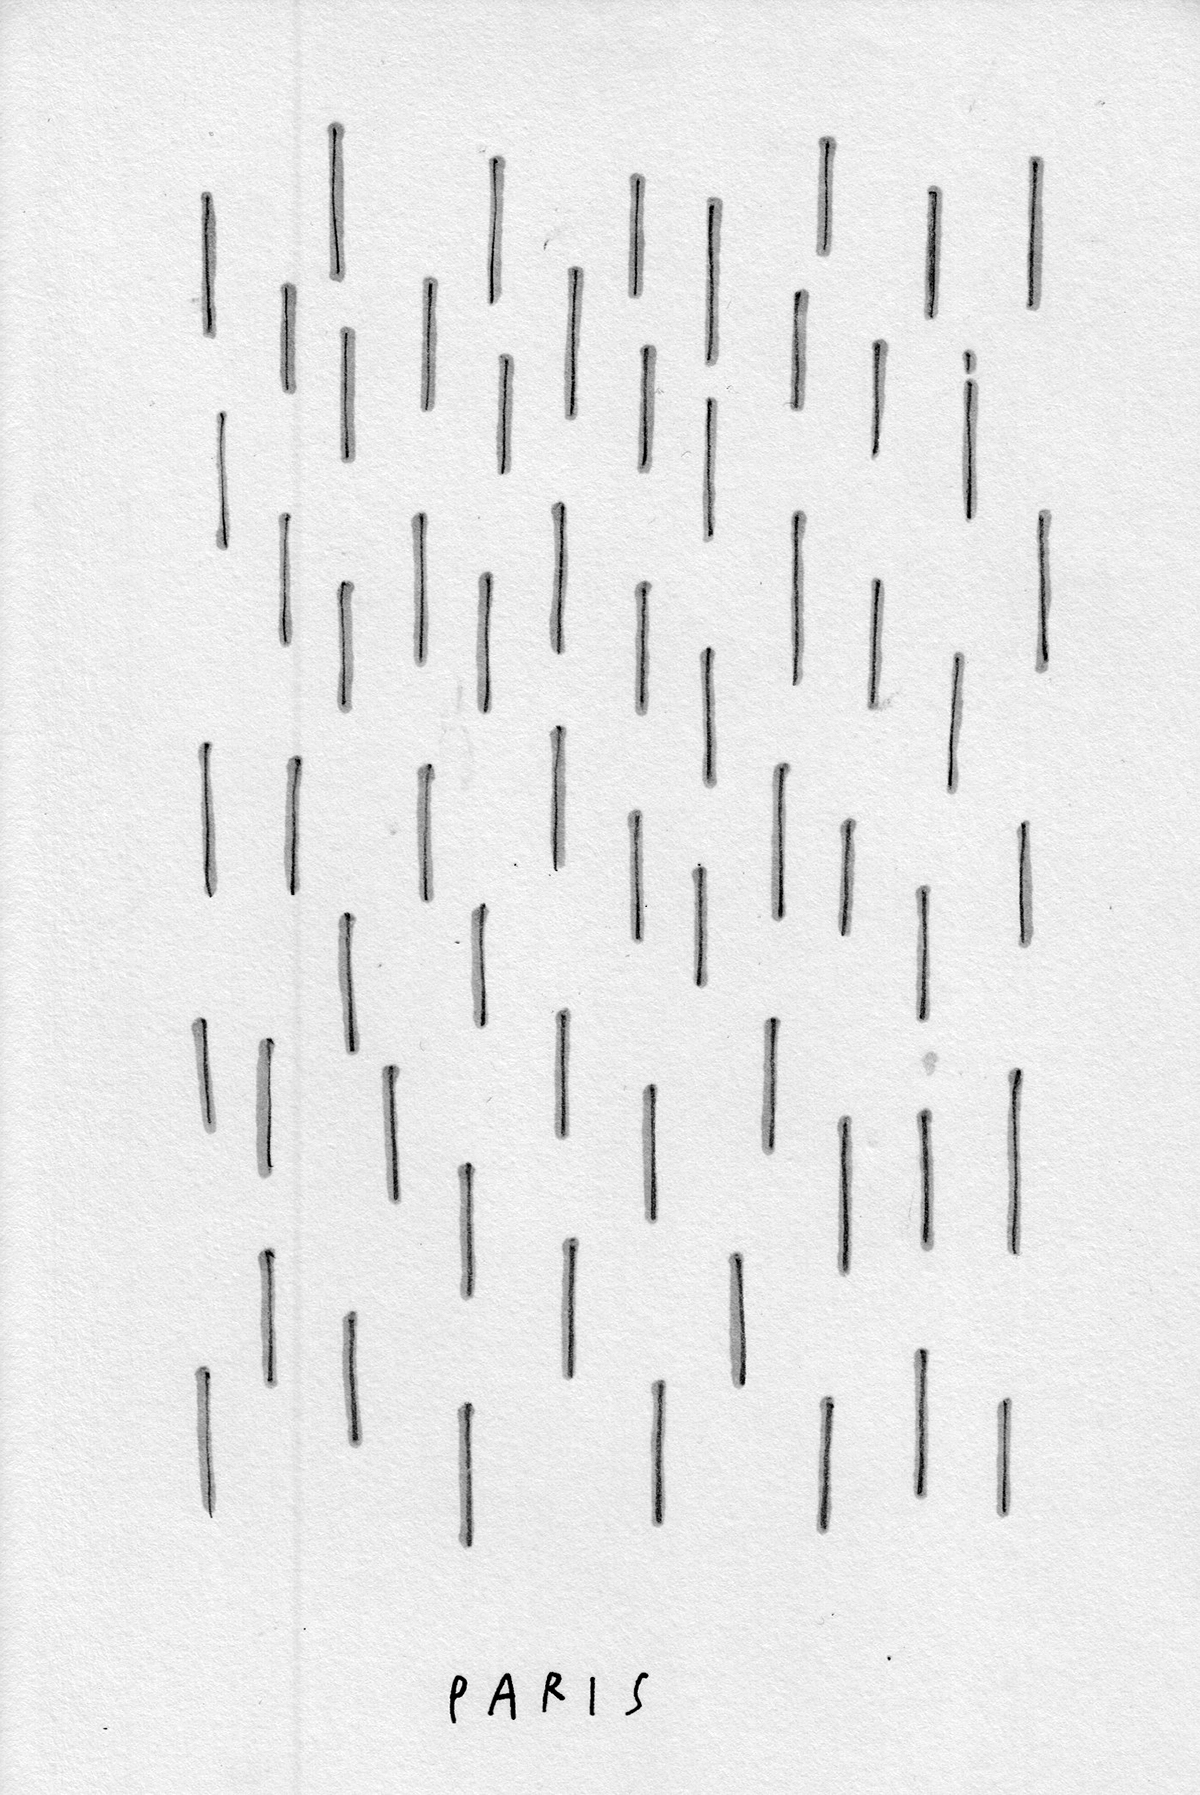 rain rainy rainyseries Amazon broadway Bergen Reykjavik London weather pencil paper wet cold